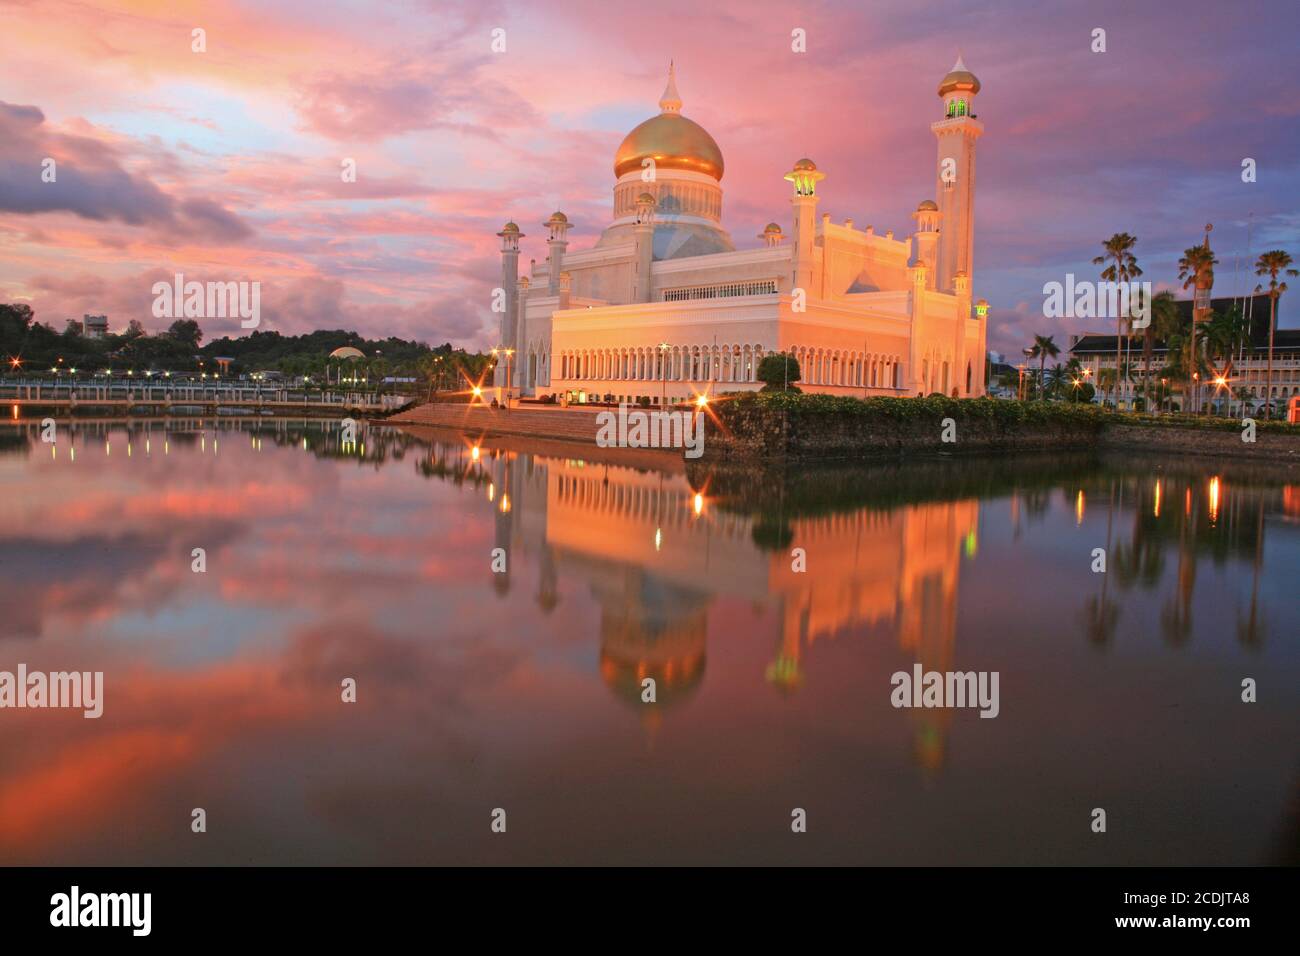 Sultan Omar Ali Saifuddien Mosque, Brunei Stock Photo